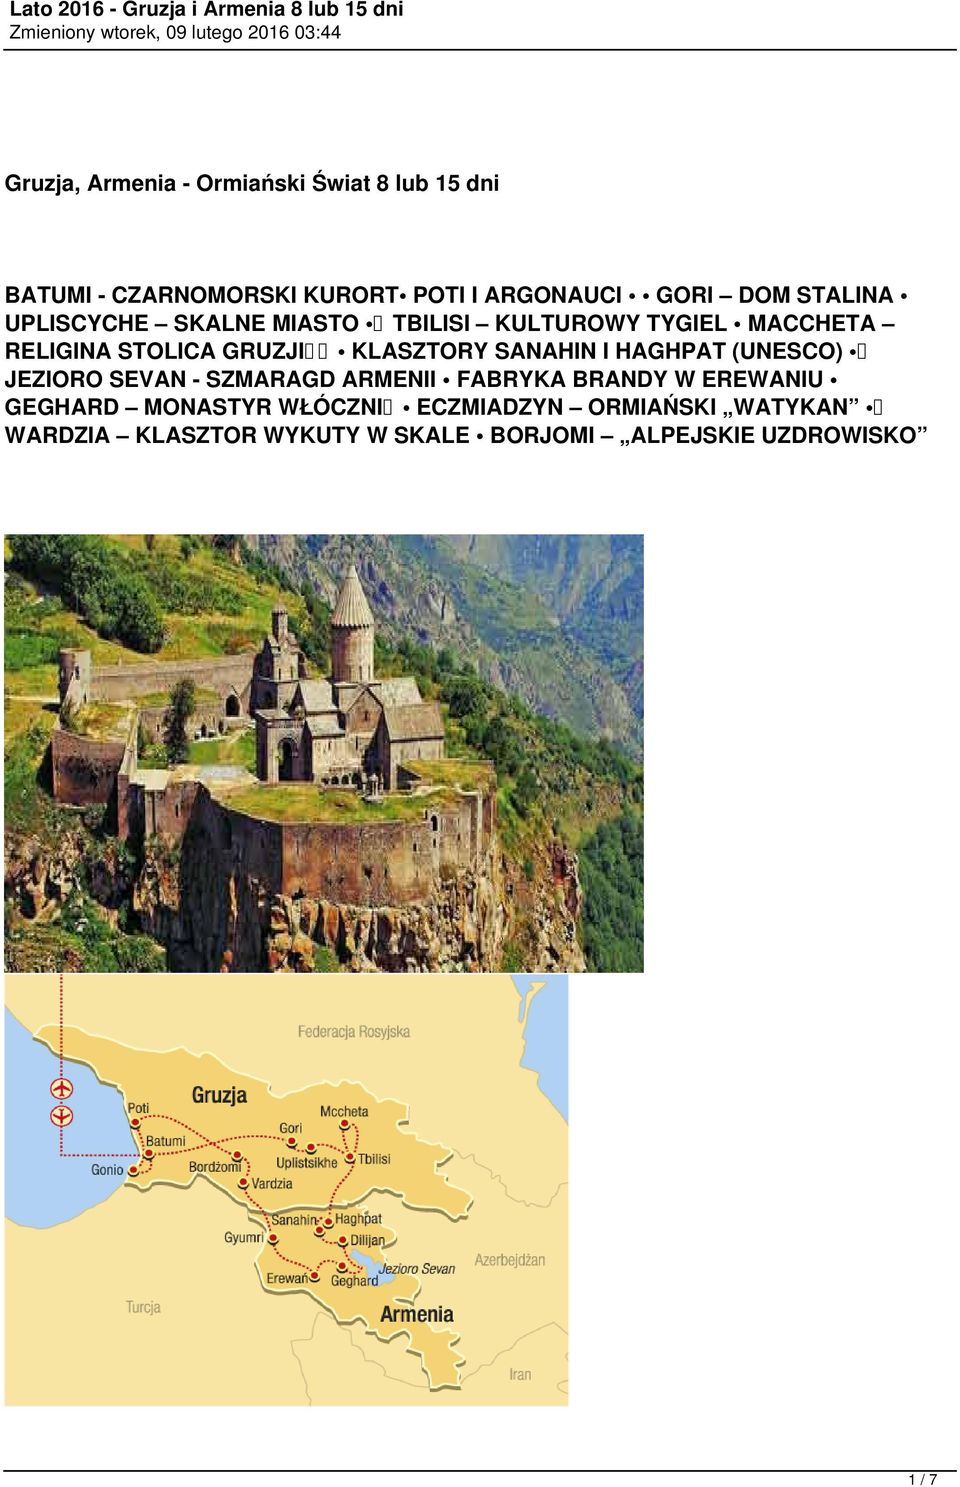 SANAHIN I HAGHPAT (UNESCO) JEZIORO SEVAN - SZMARAGD ARMENII FABRYKA BRANDY W EREWANIU GEGHARD MONASTYR